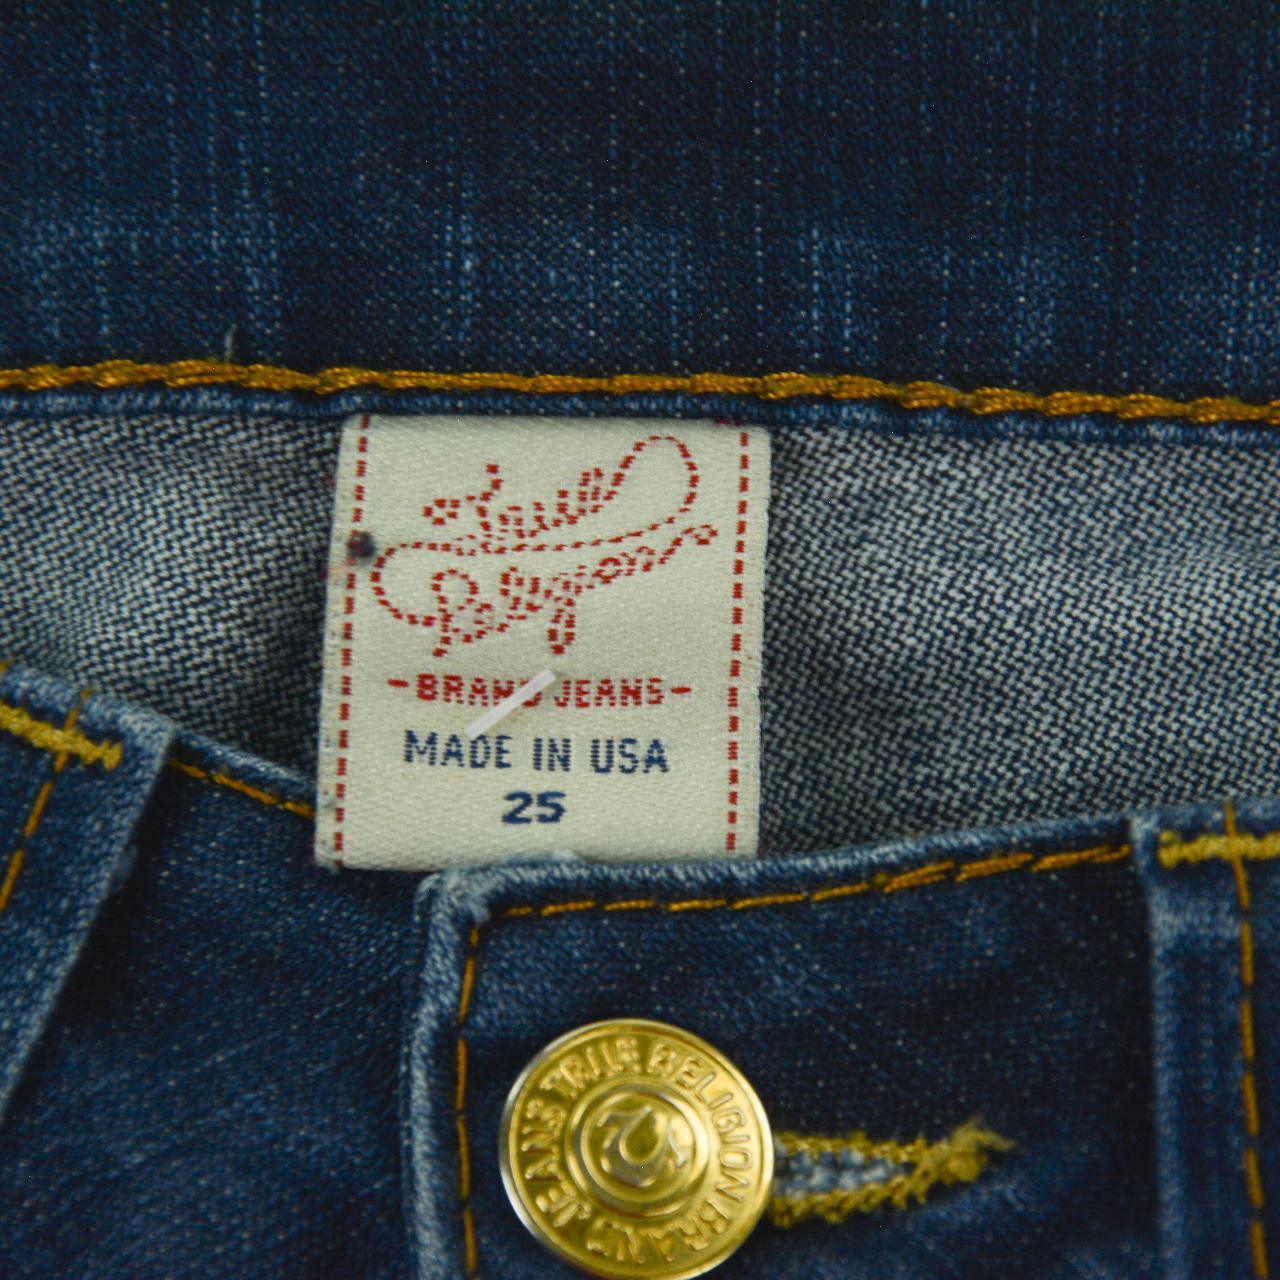 Vintage True Religion Denim Jeans Women's Size W28 - Known Source